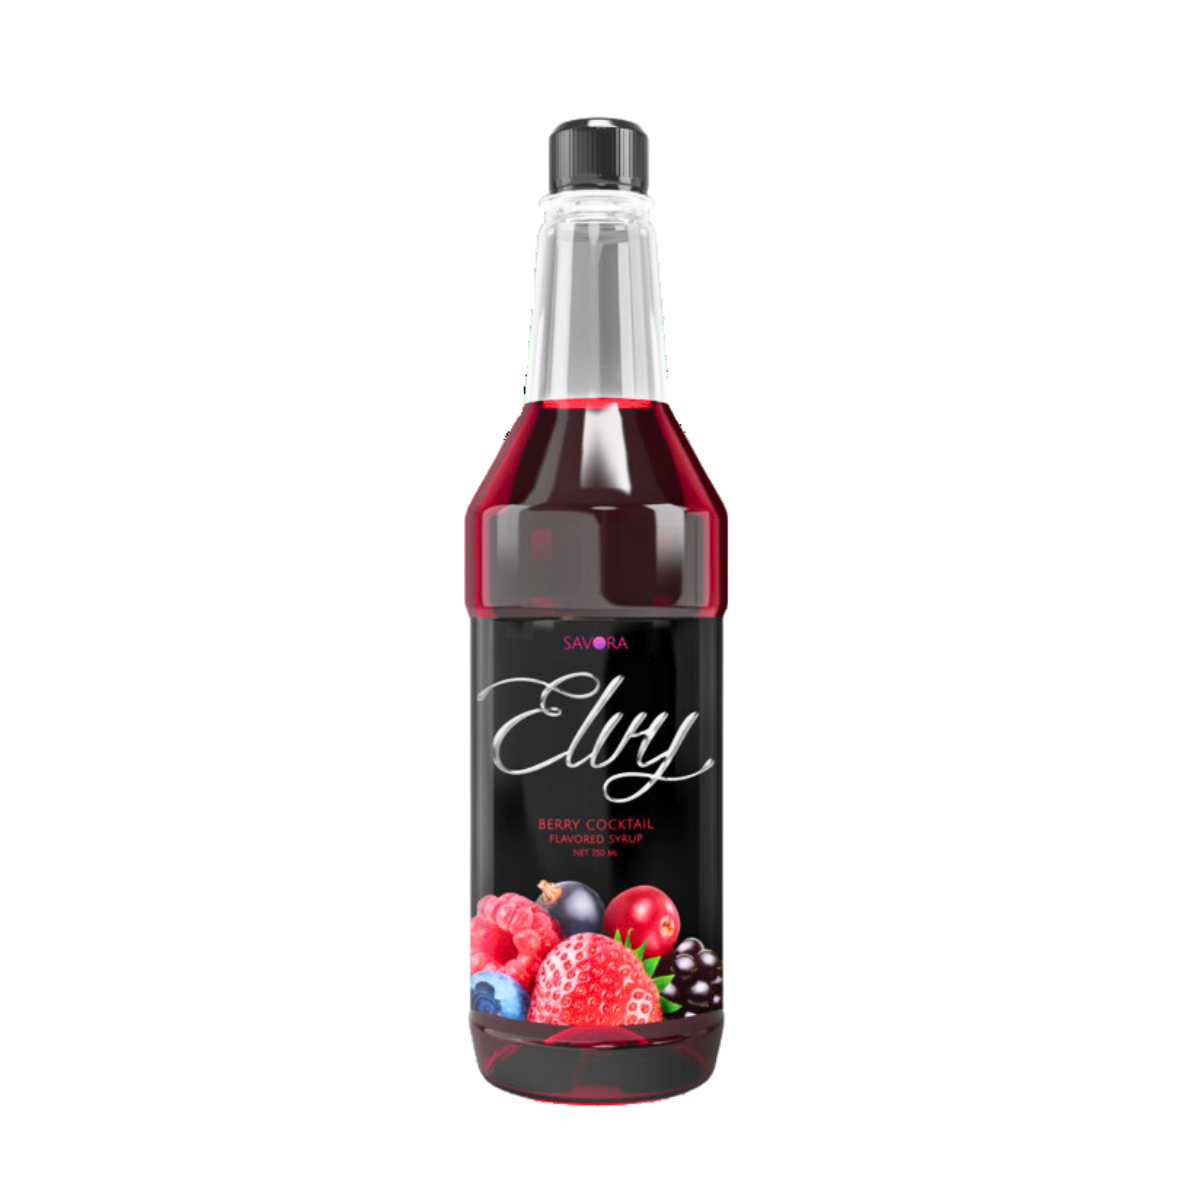 Savora Elvy Berry Cocktail Flavor Syrup 750ml